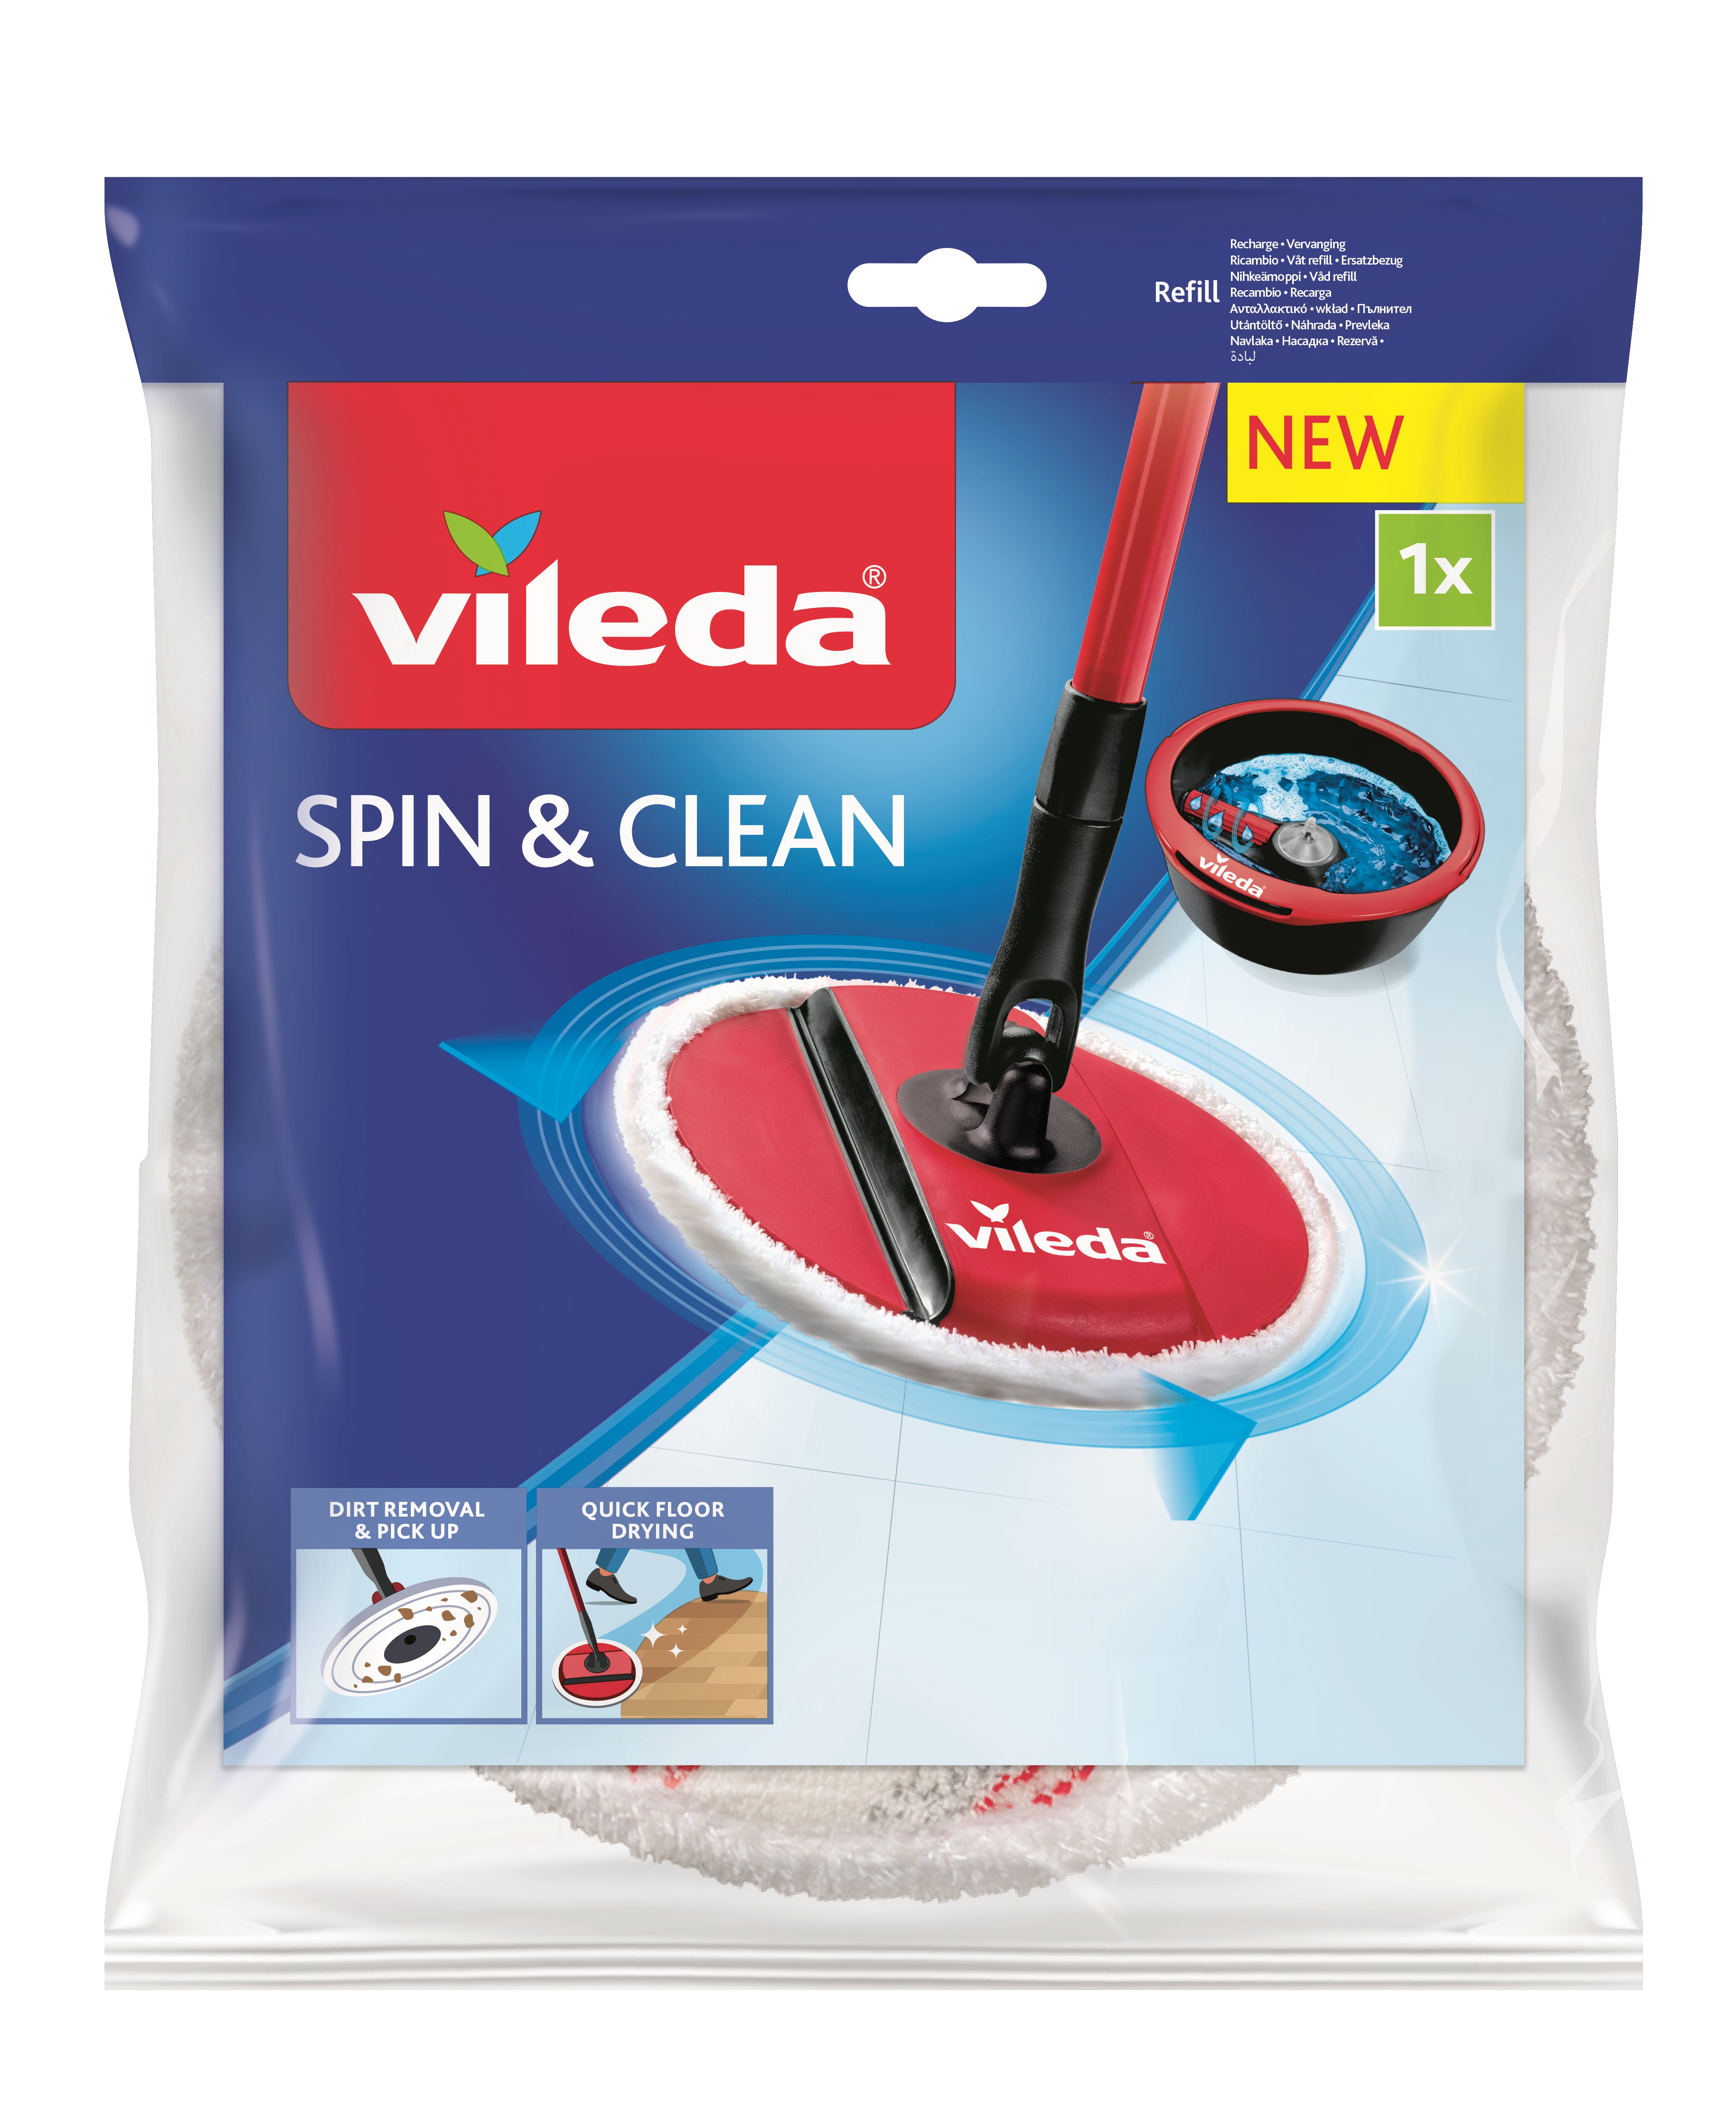 SPIN & CLEAN VILEDA CSERE